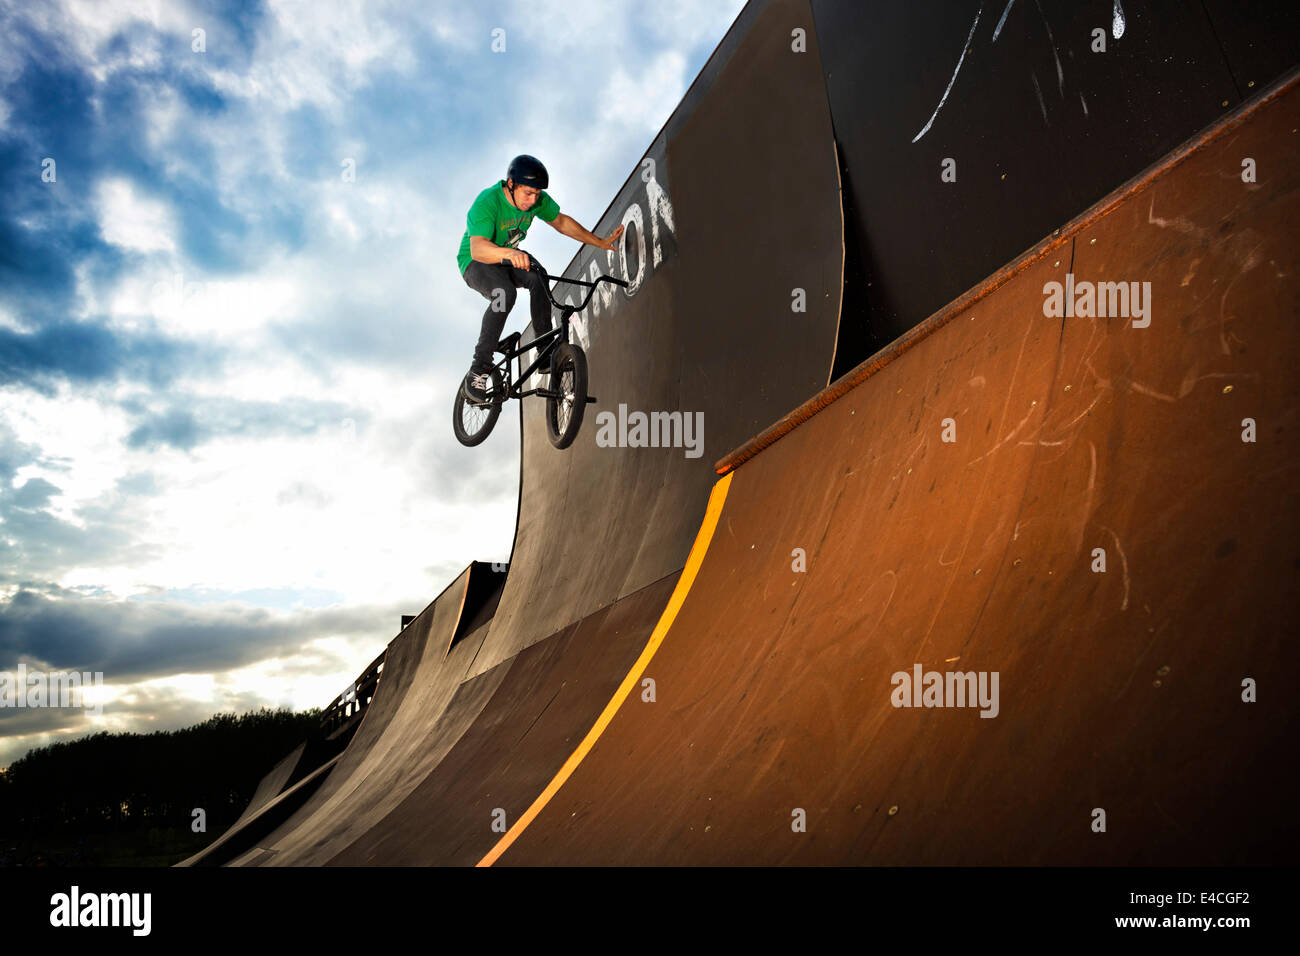 BMX biker performing a stunt on a sports ramp Stock Photo